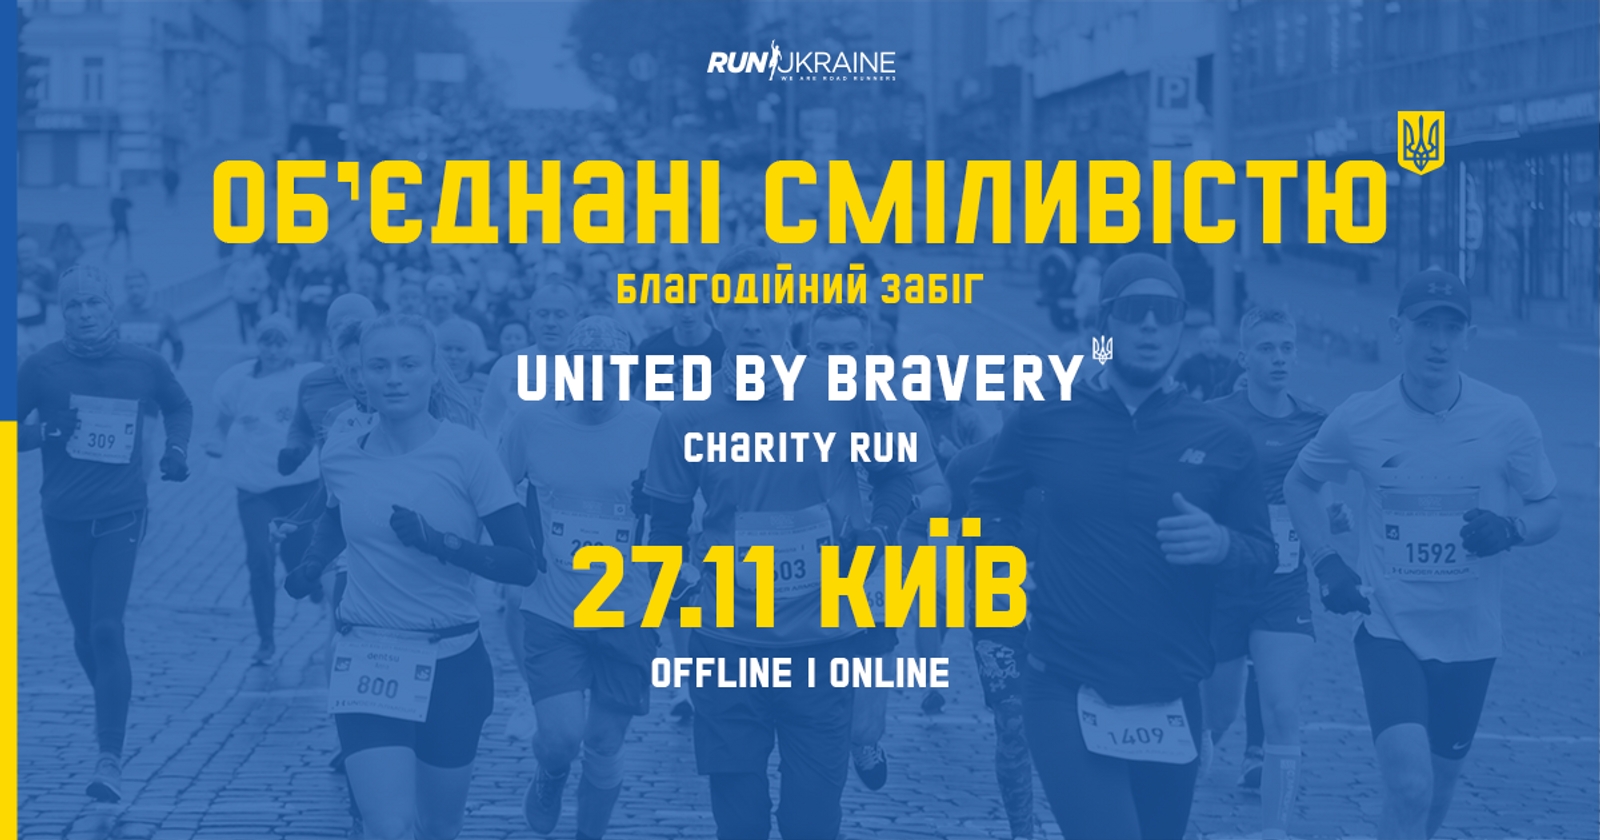 Charity Run: UNITED BY BRAVERY